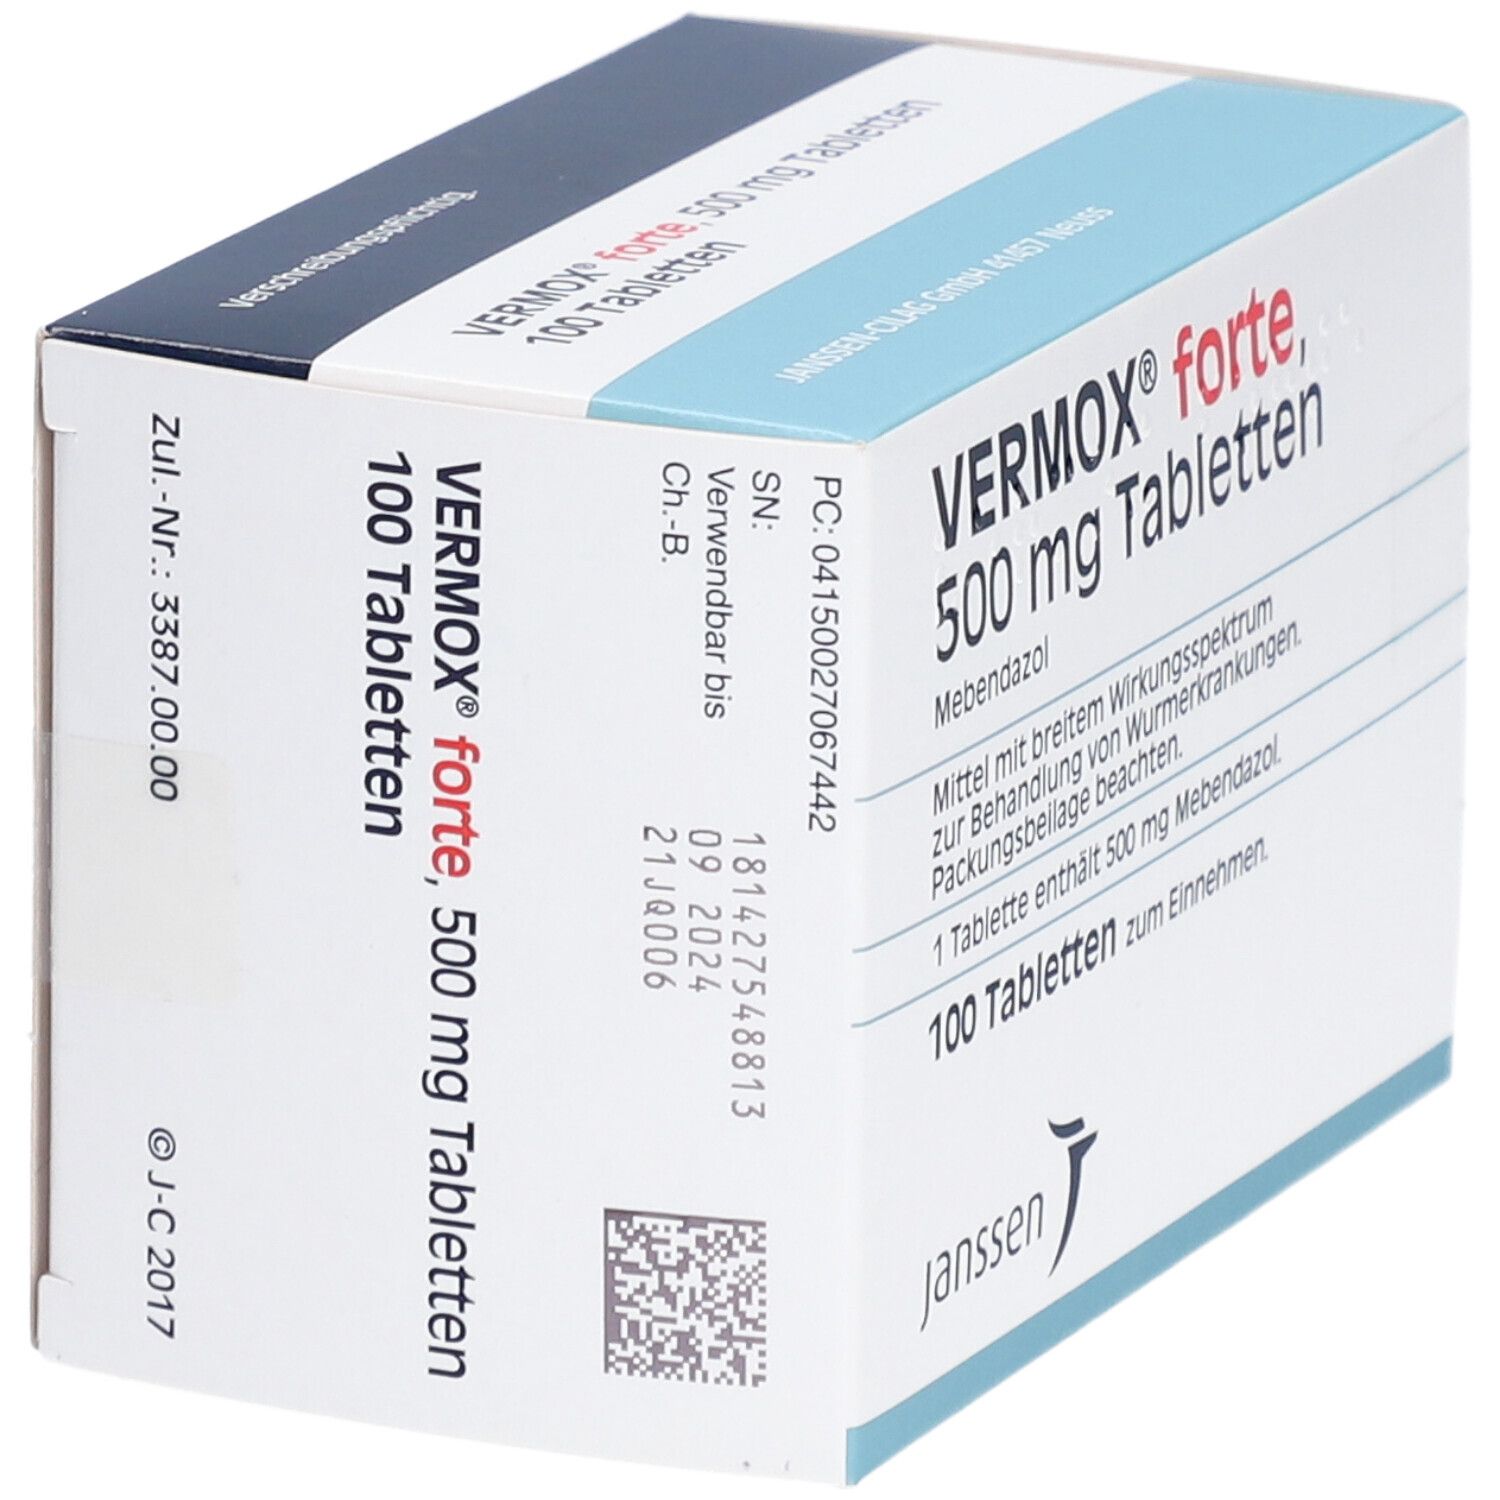 VERMOX® forte 500 mg